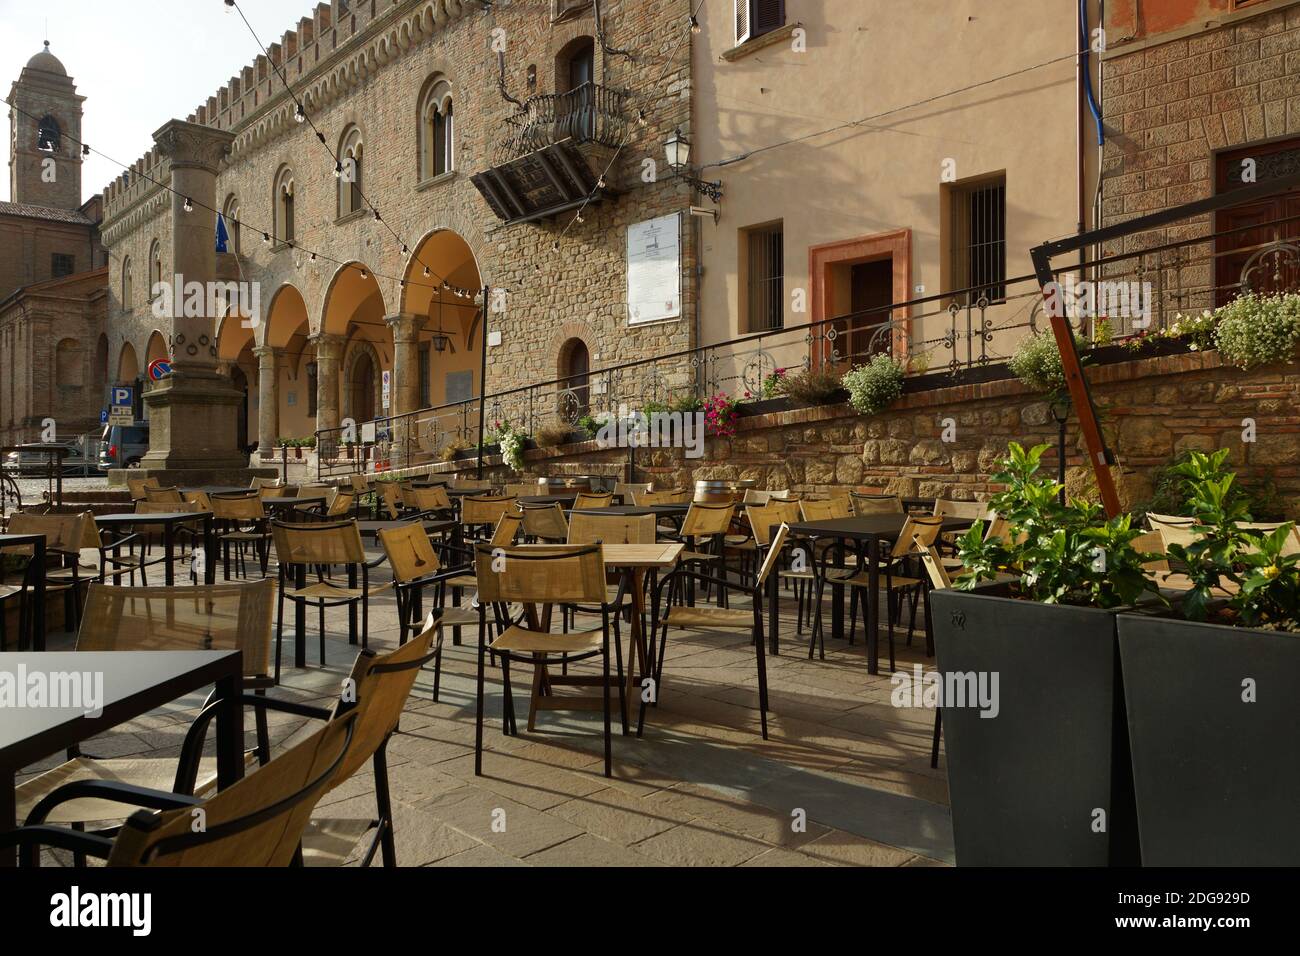 Bertinoro, Forlì-Cesena, Emilia-Romagna, Italy. A cozy Italian open-air cafe in the historic part of the city of Bertinoro. Stock Photo